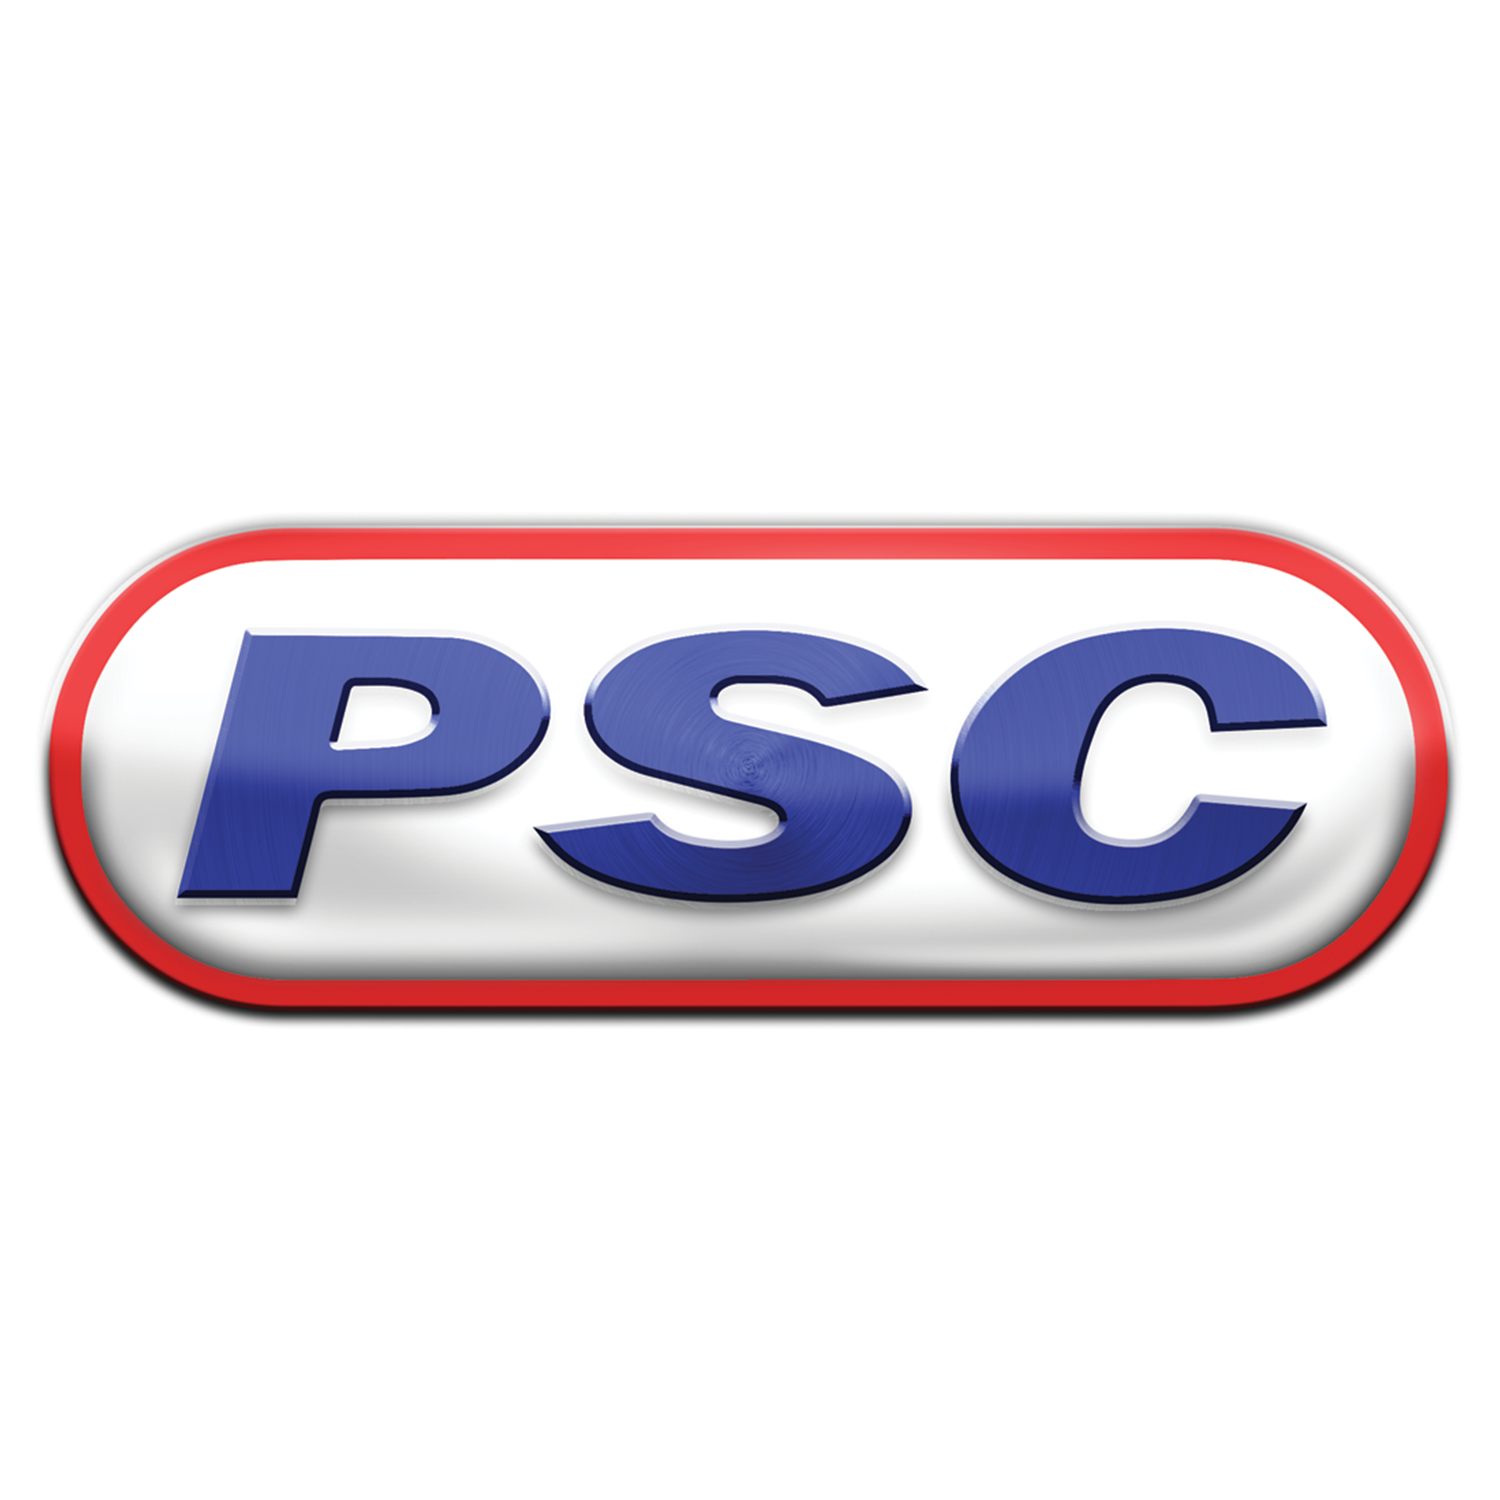 POSS Petroleum Services Company